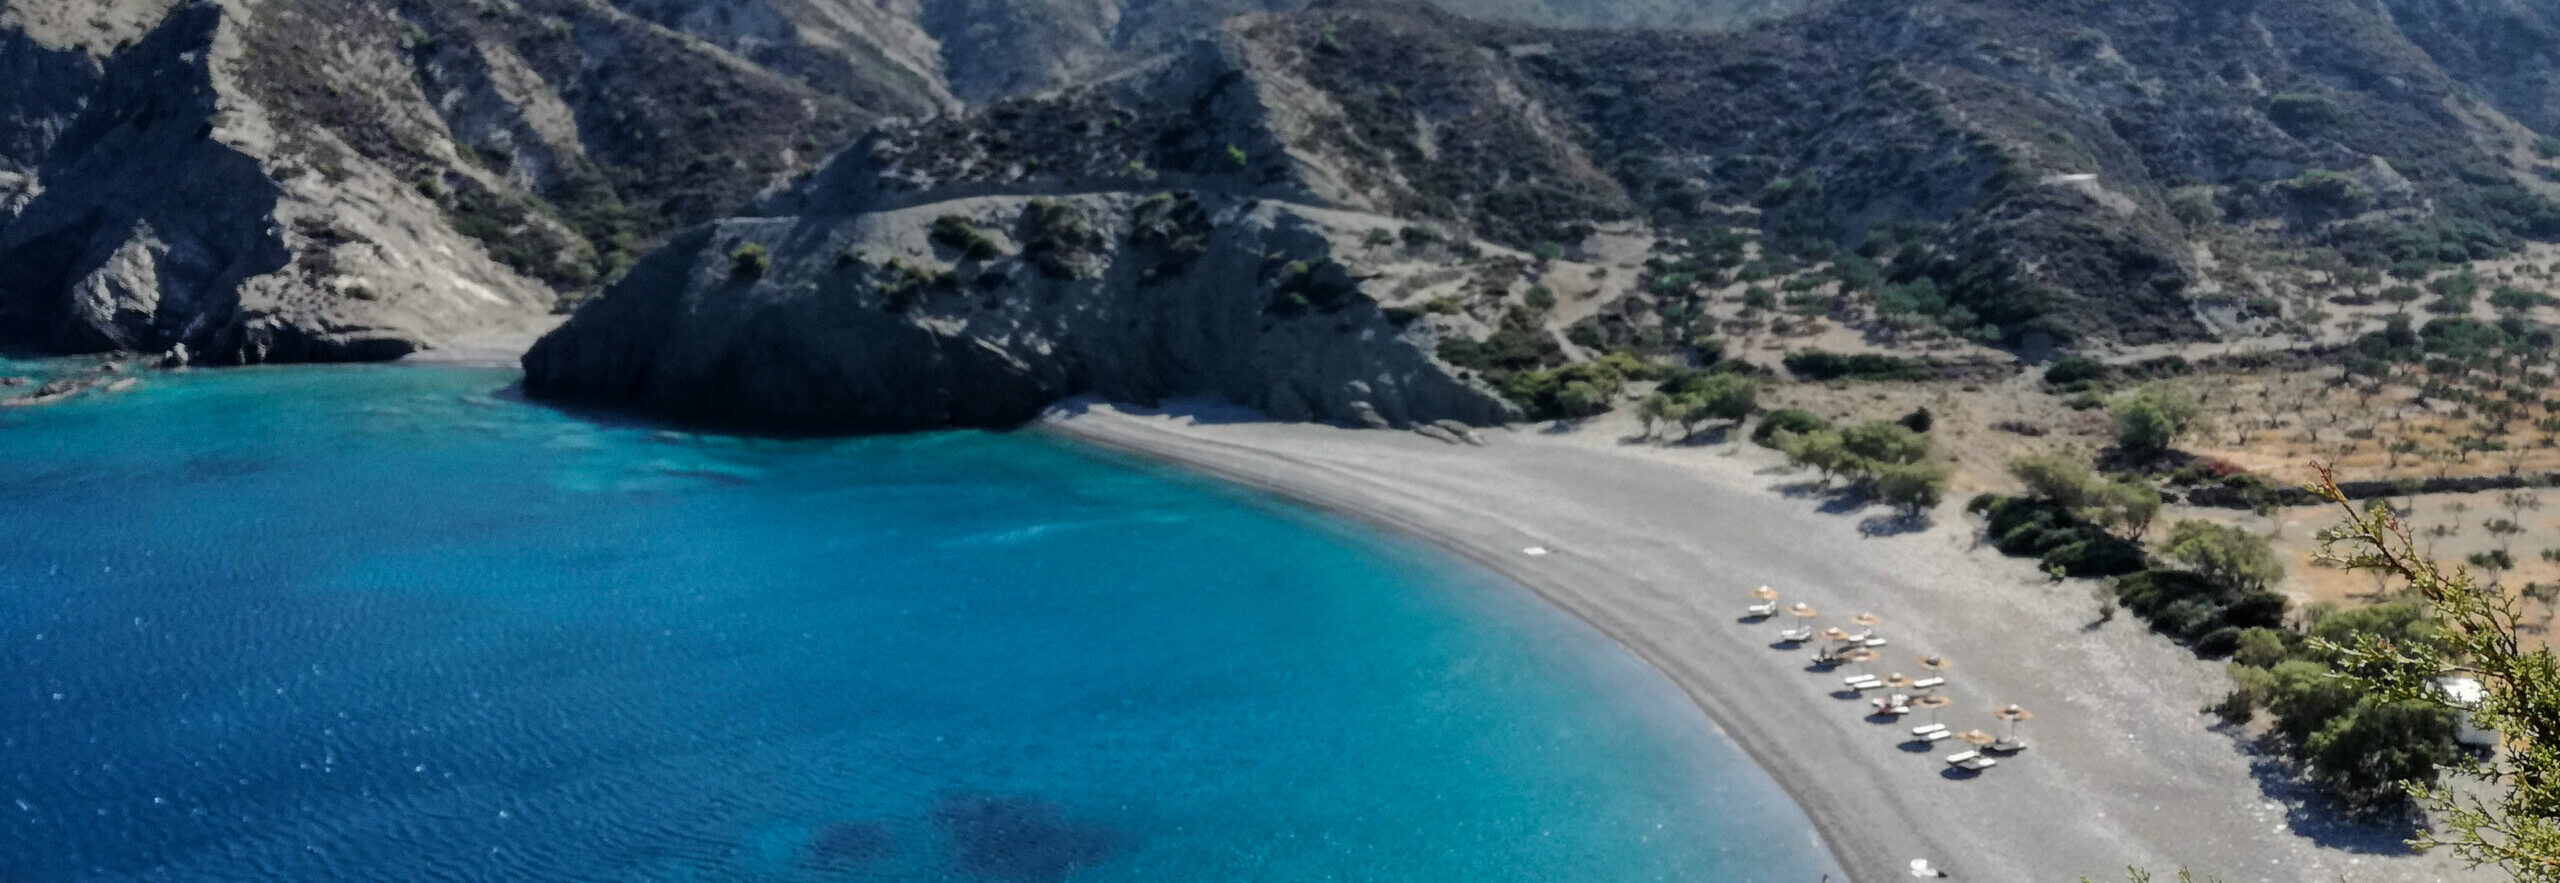 Karpathos: the island of 100 beaches